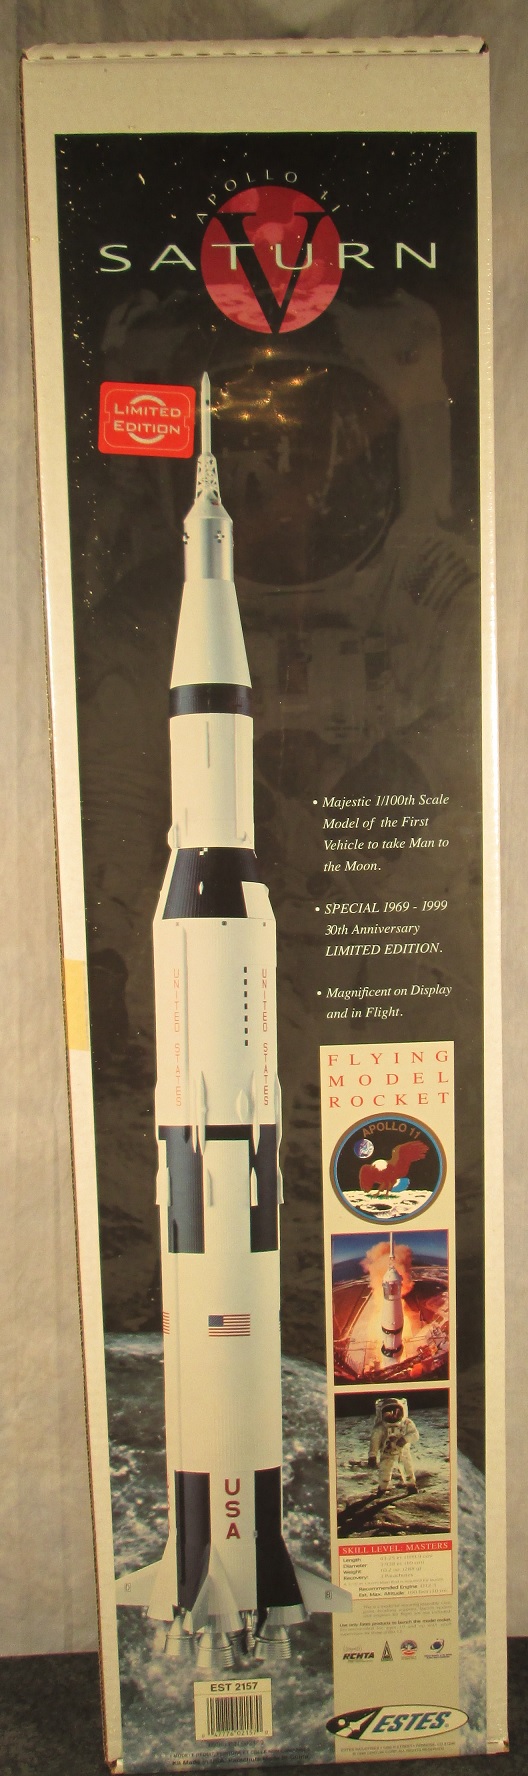 apollo 5 rocket space ship models